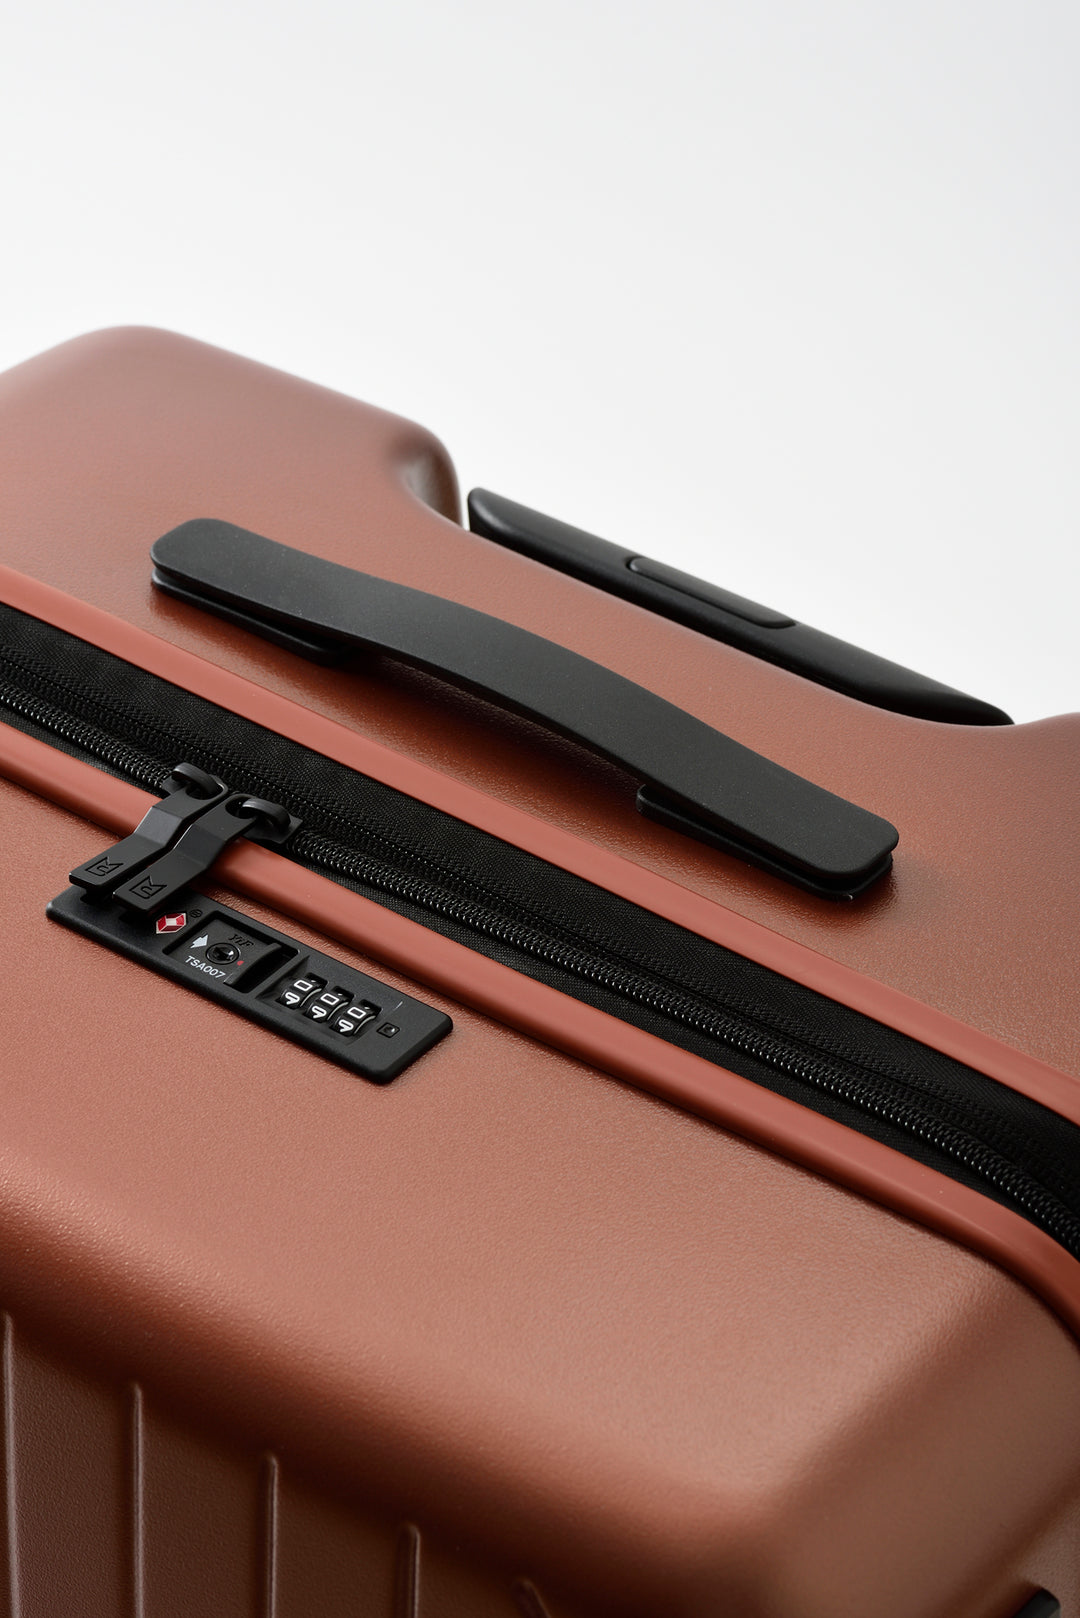 MILESTO UTILITY Expandable Luggage (75-81L) - Copper MLS890-CP